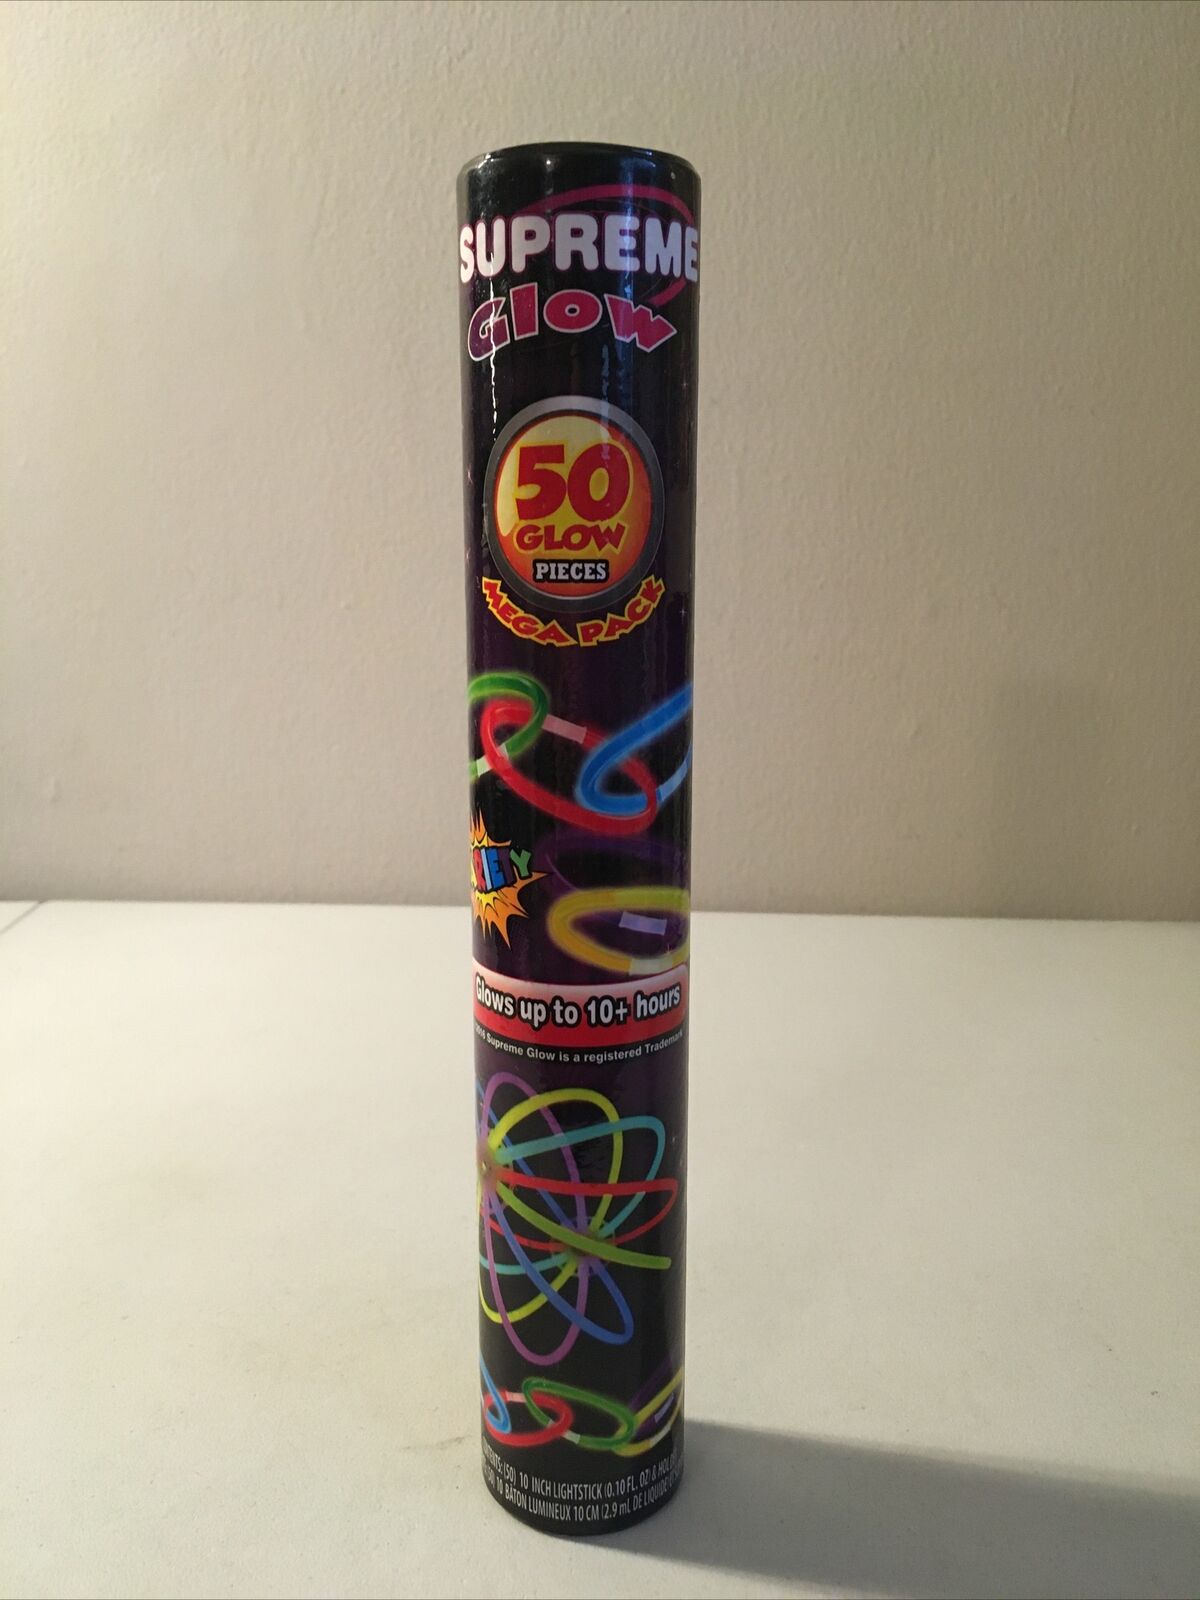 Supreme Glow Mega Pack - 50 Glow 10" Lightsticks Pieces - Brand New Tube